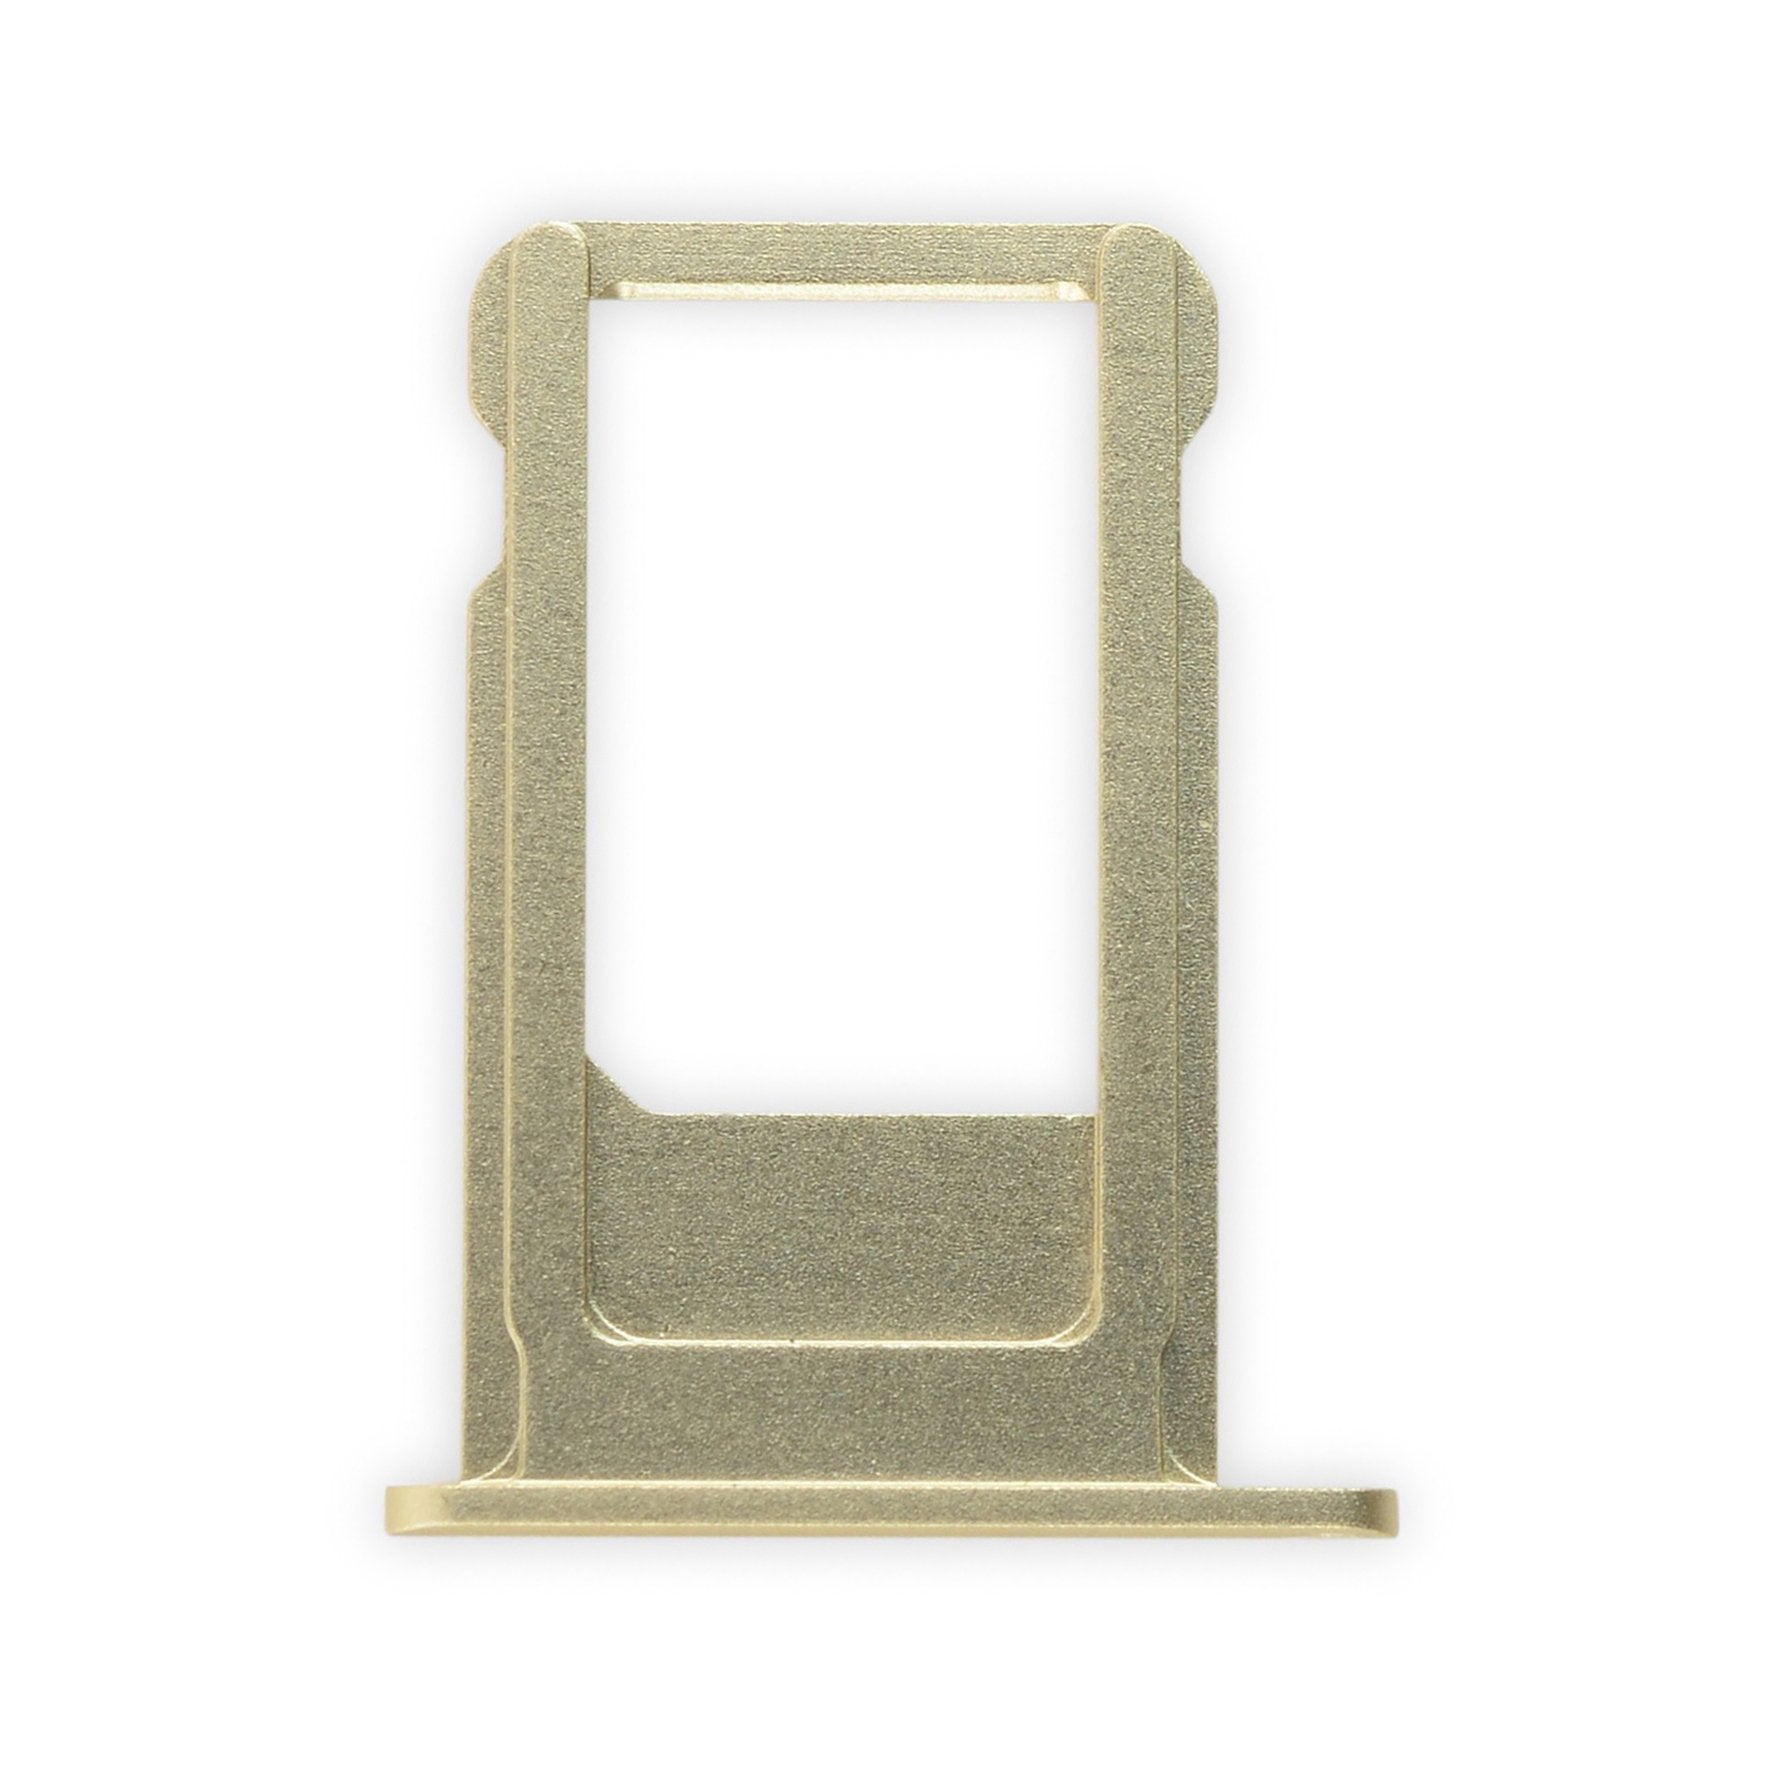 iPhone 6s Nano SIM Card Tray Gold New